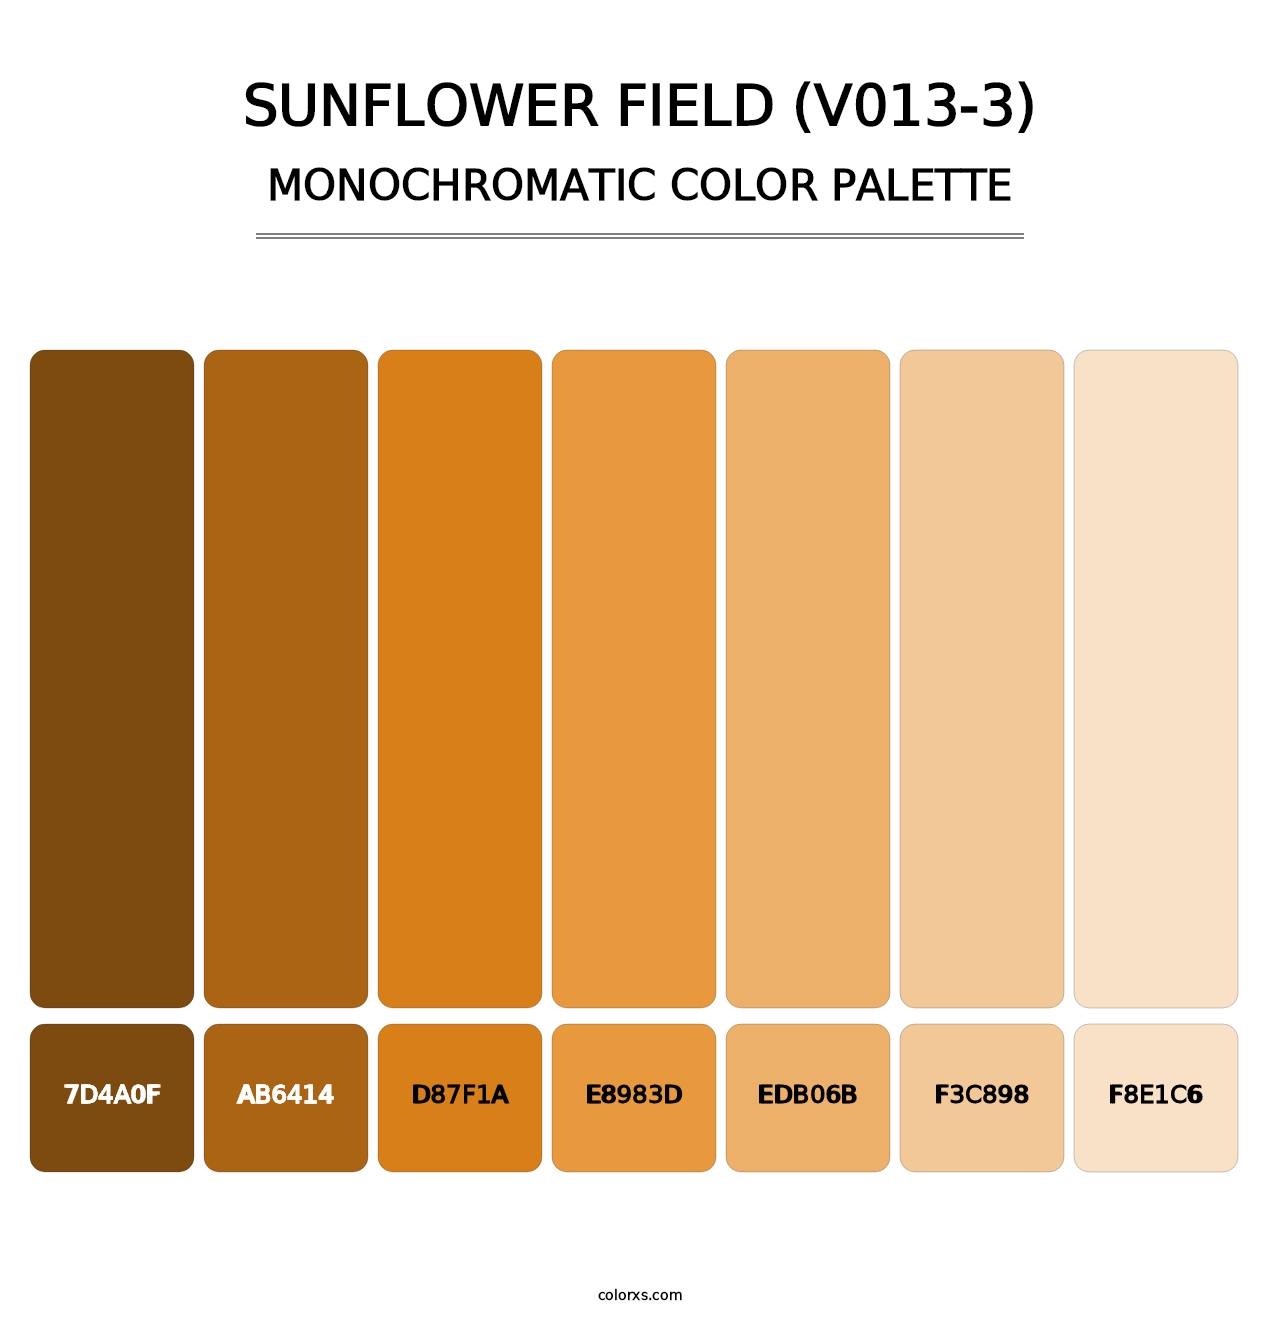 Sunflower Field (V013-3) - Monochromatic Color Palette